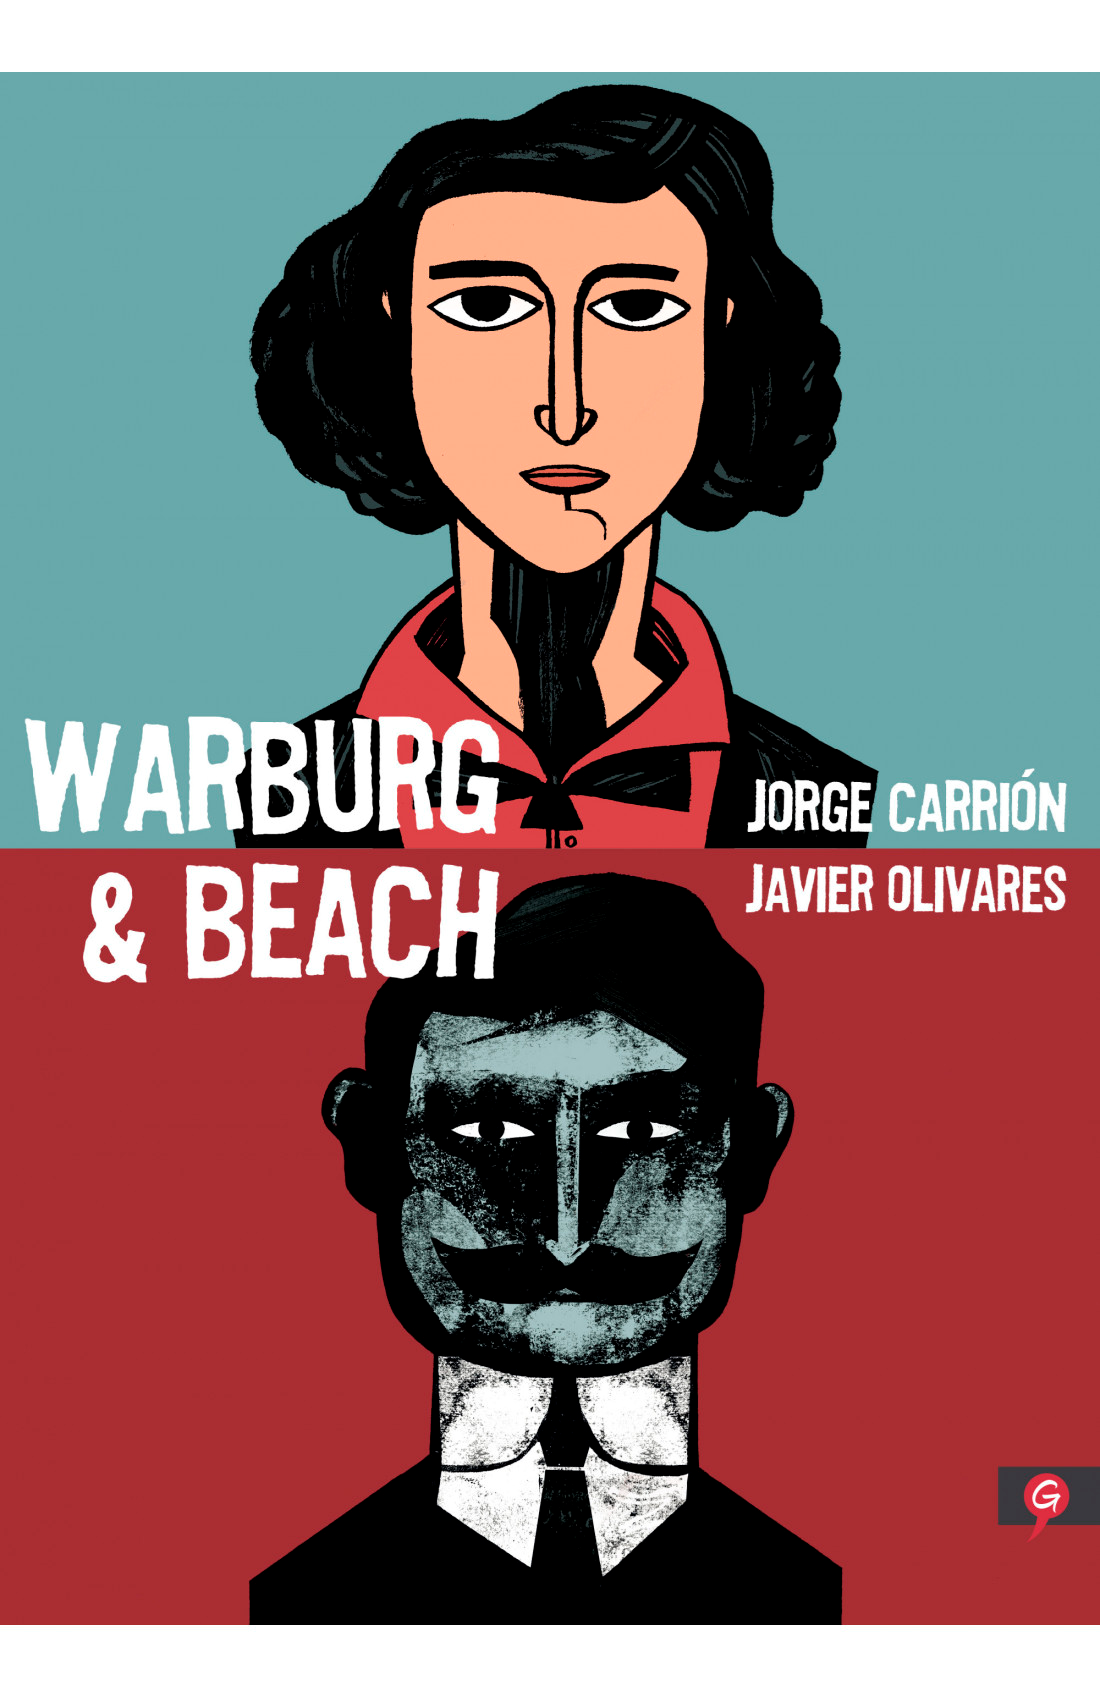  Warburg & Beach, de Jorge Carrión